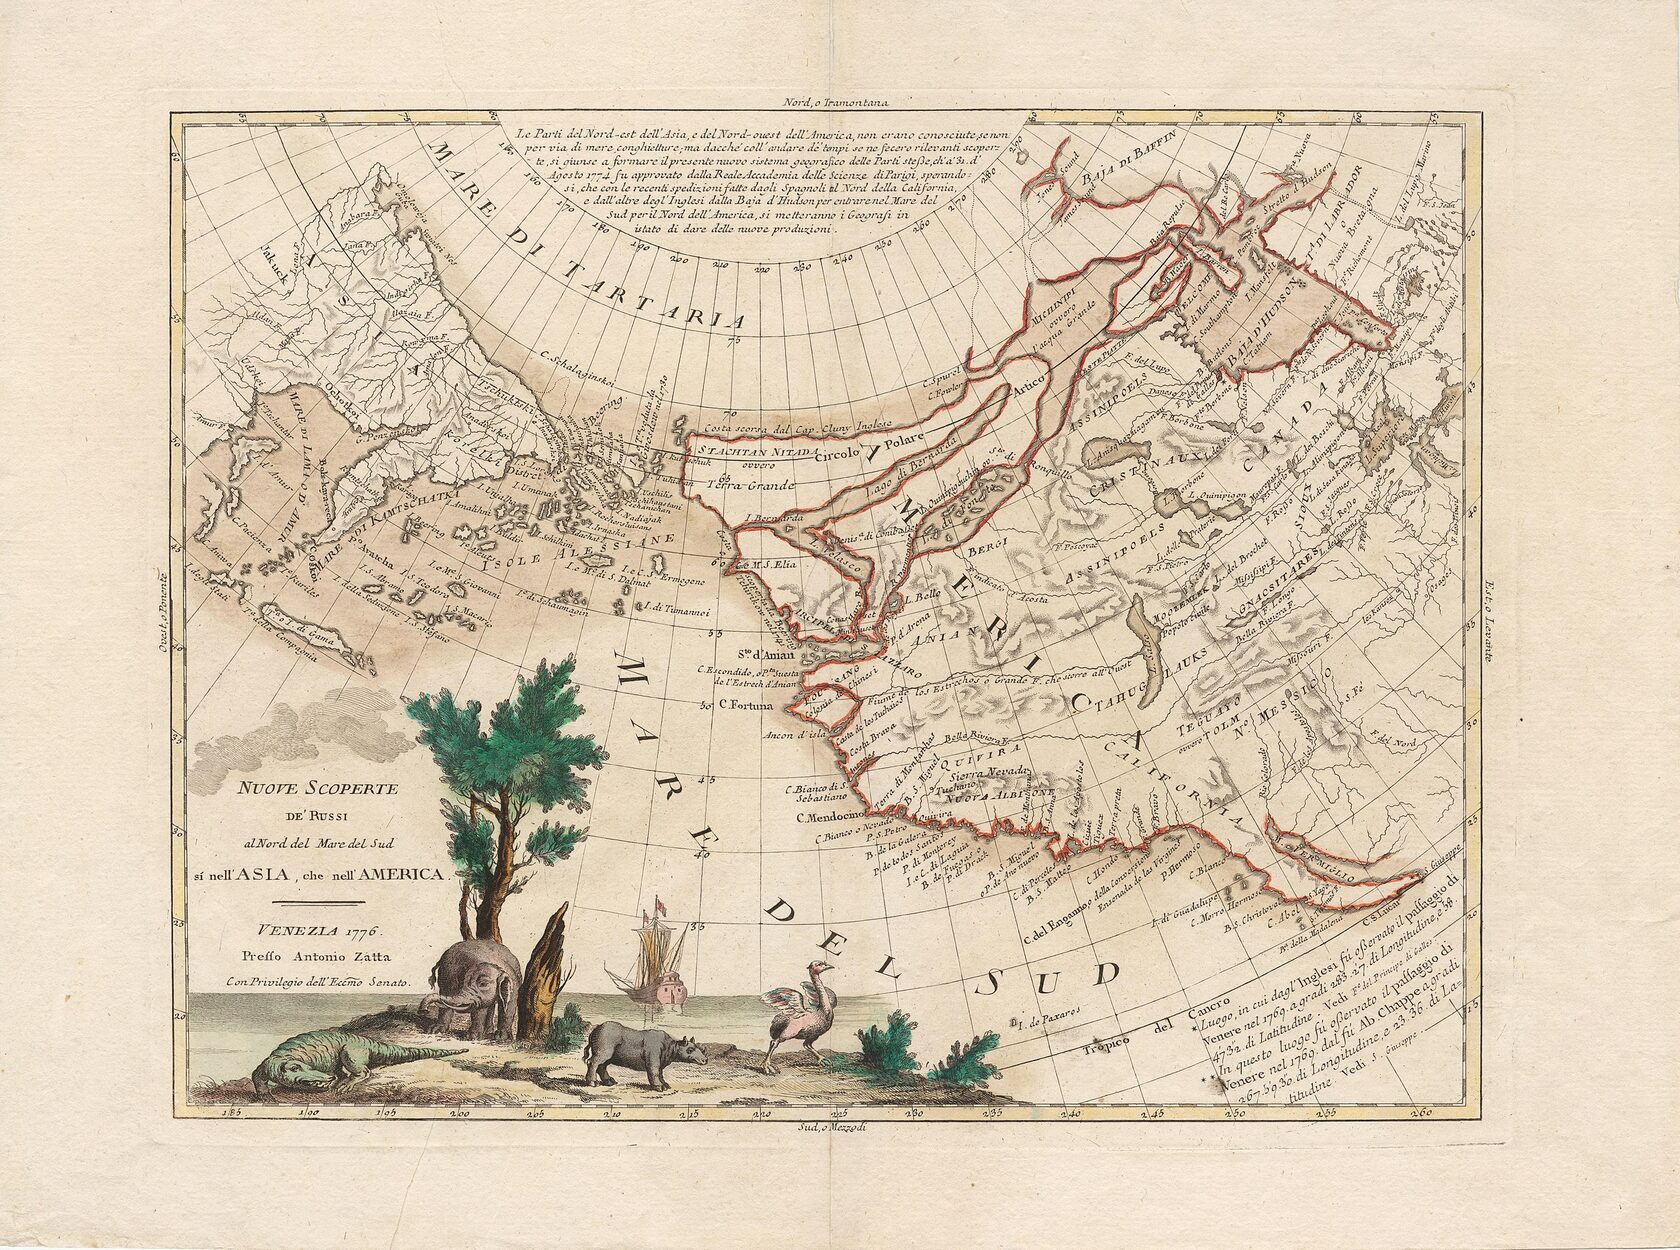 Cartographer Antonio Zatta included the Lake de Fonte on this 1776 map.